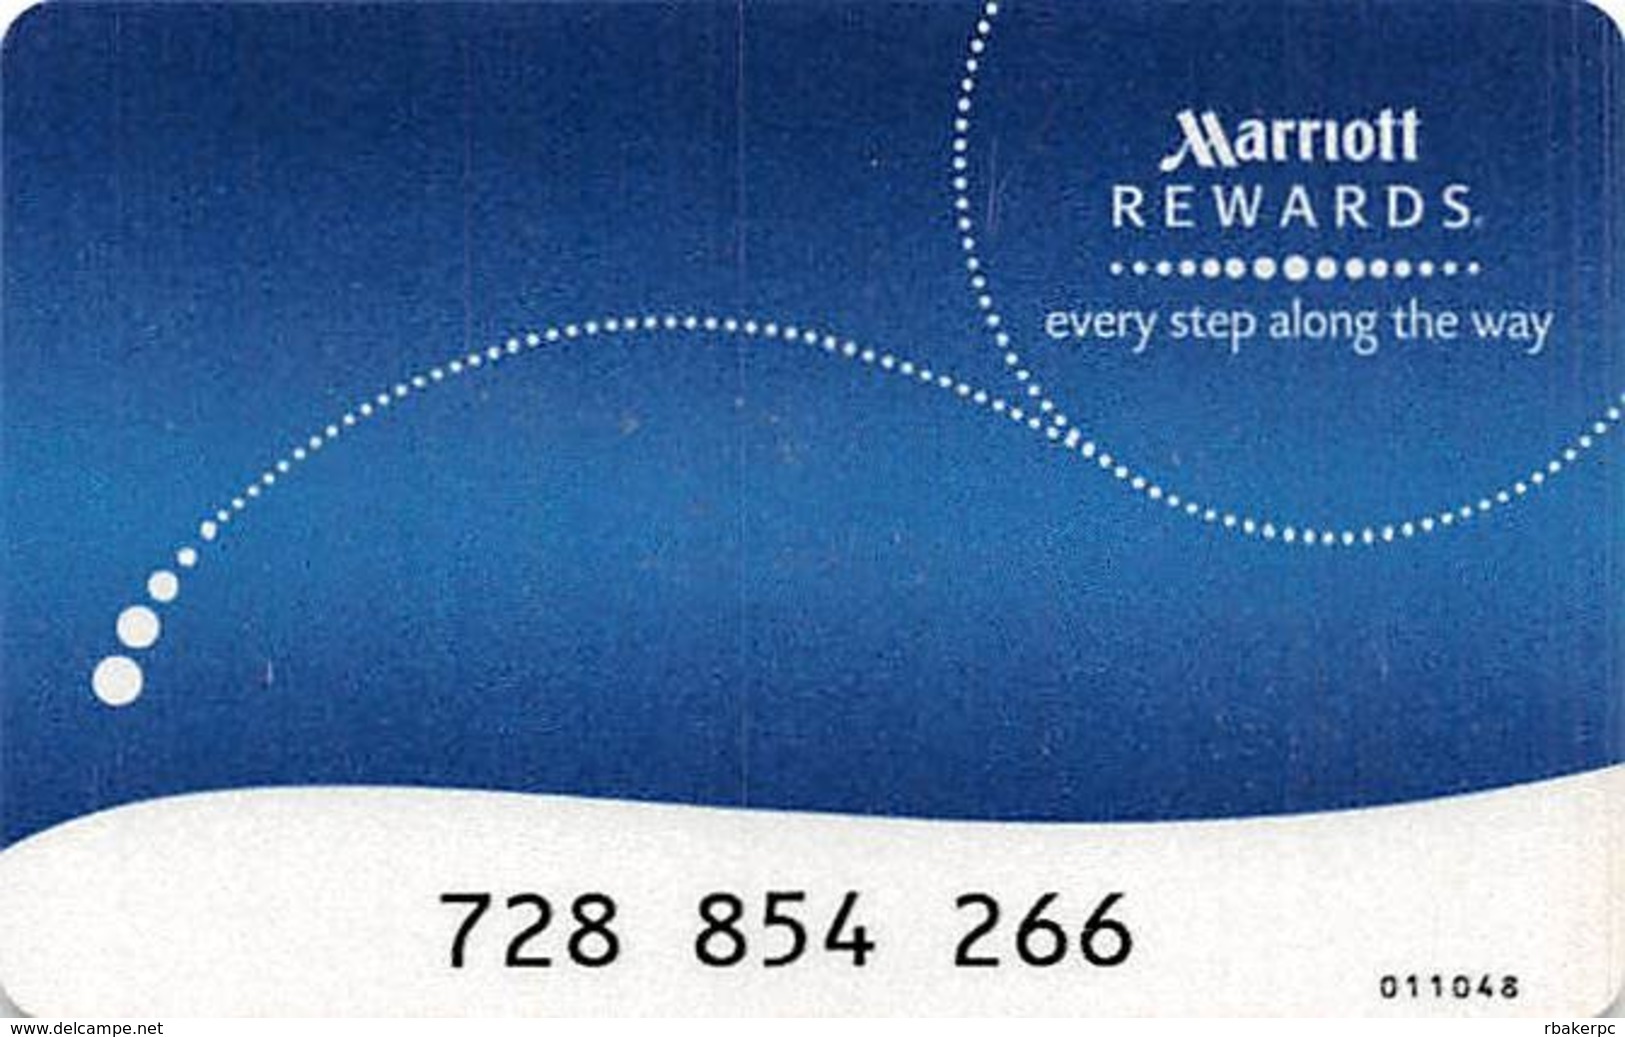 Marriott Rewards Card - Hotelsleutels (kaarten)